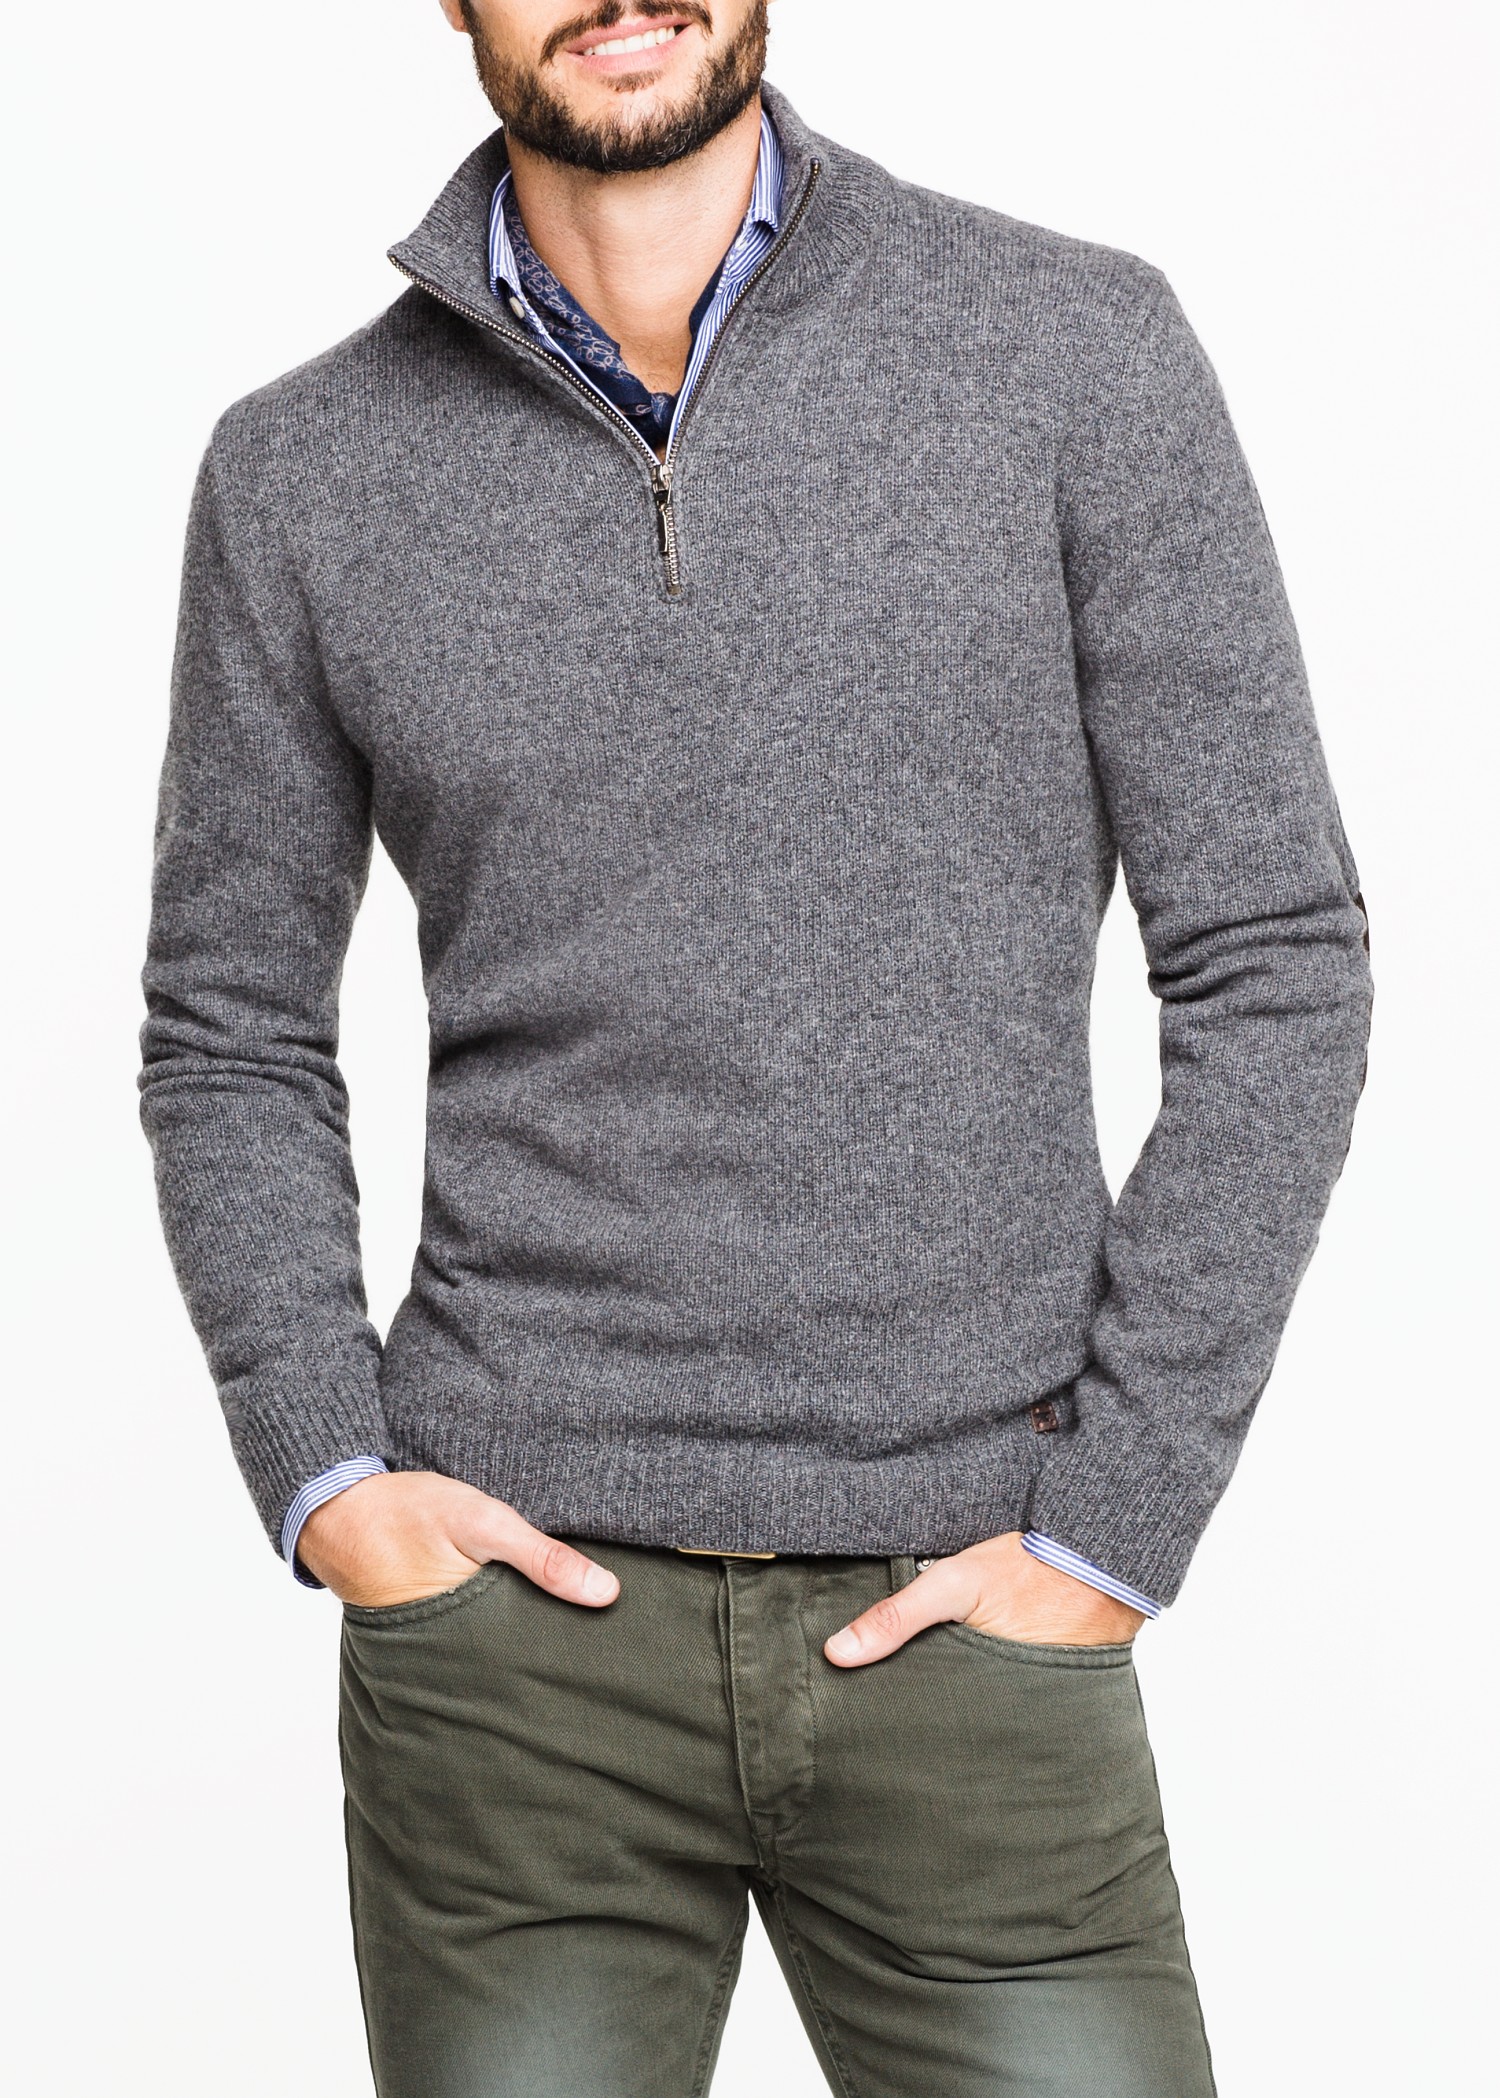 Lyst - Mango Suede Elbow Patch Woolblend Sweater in Gray for Men